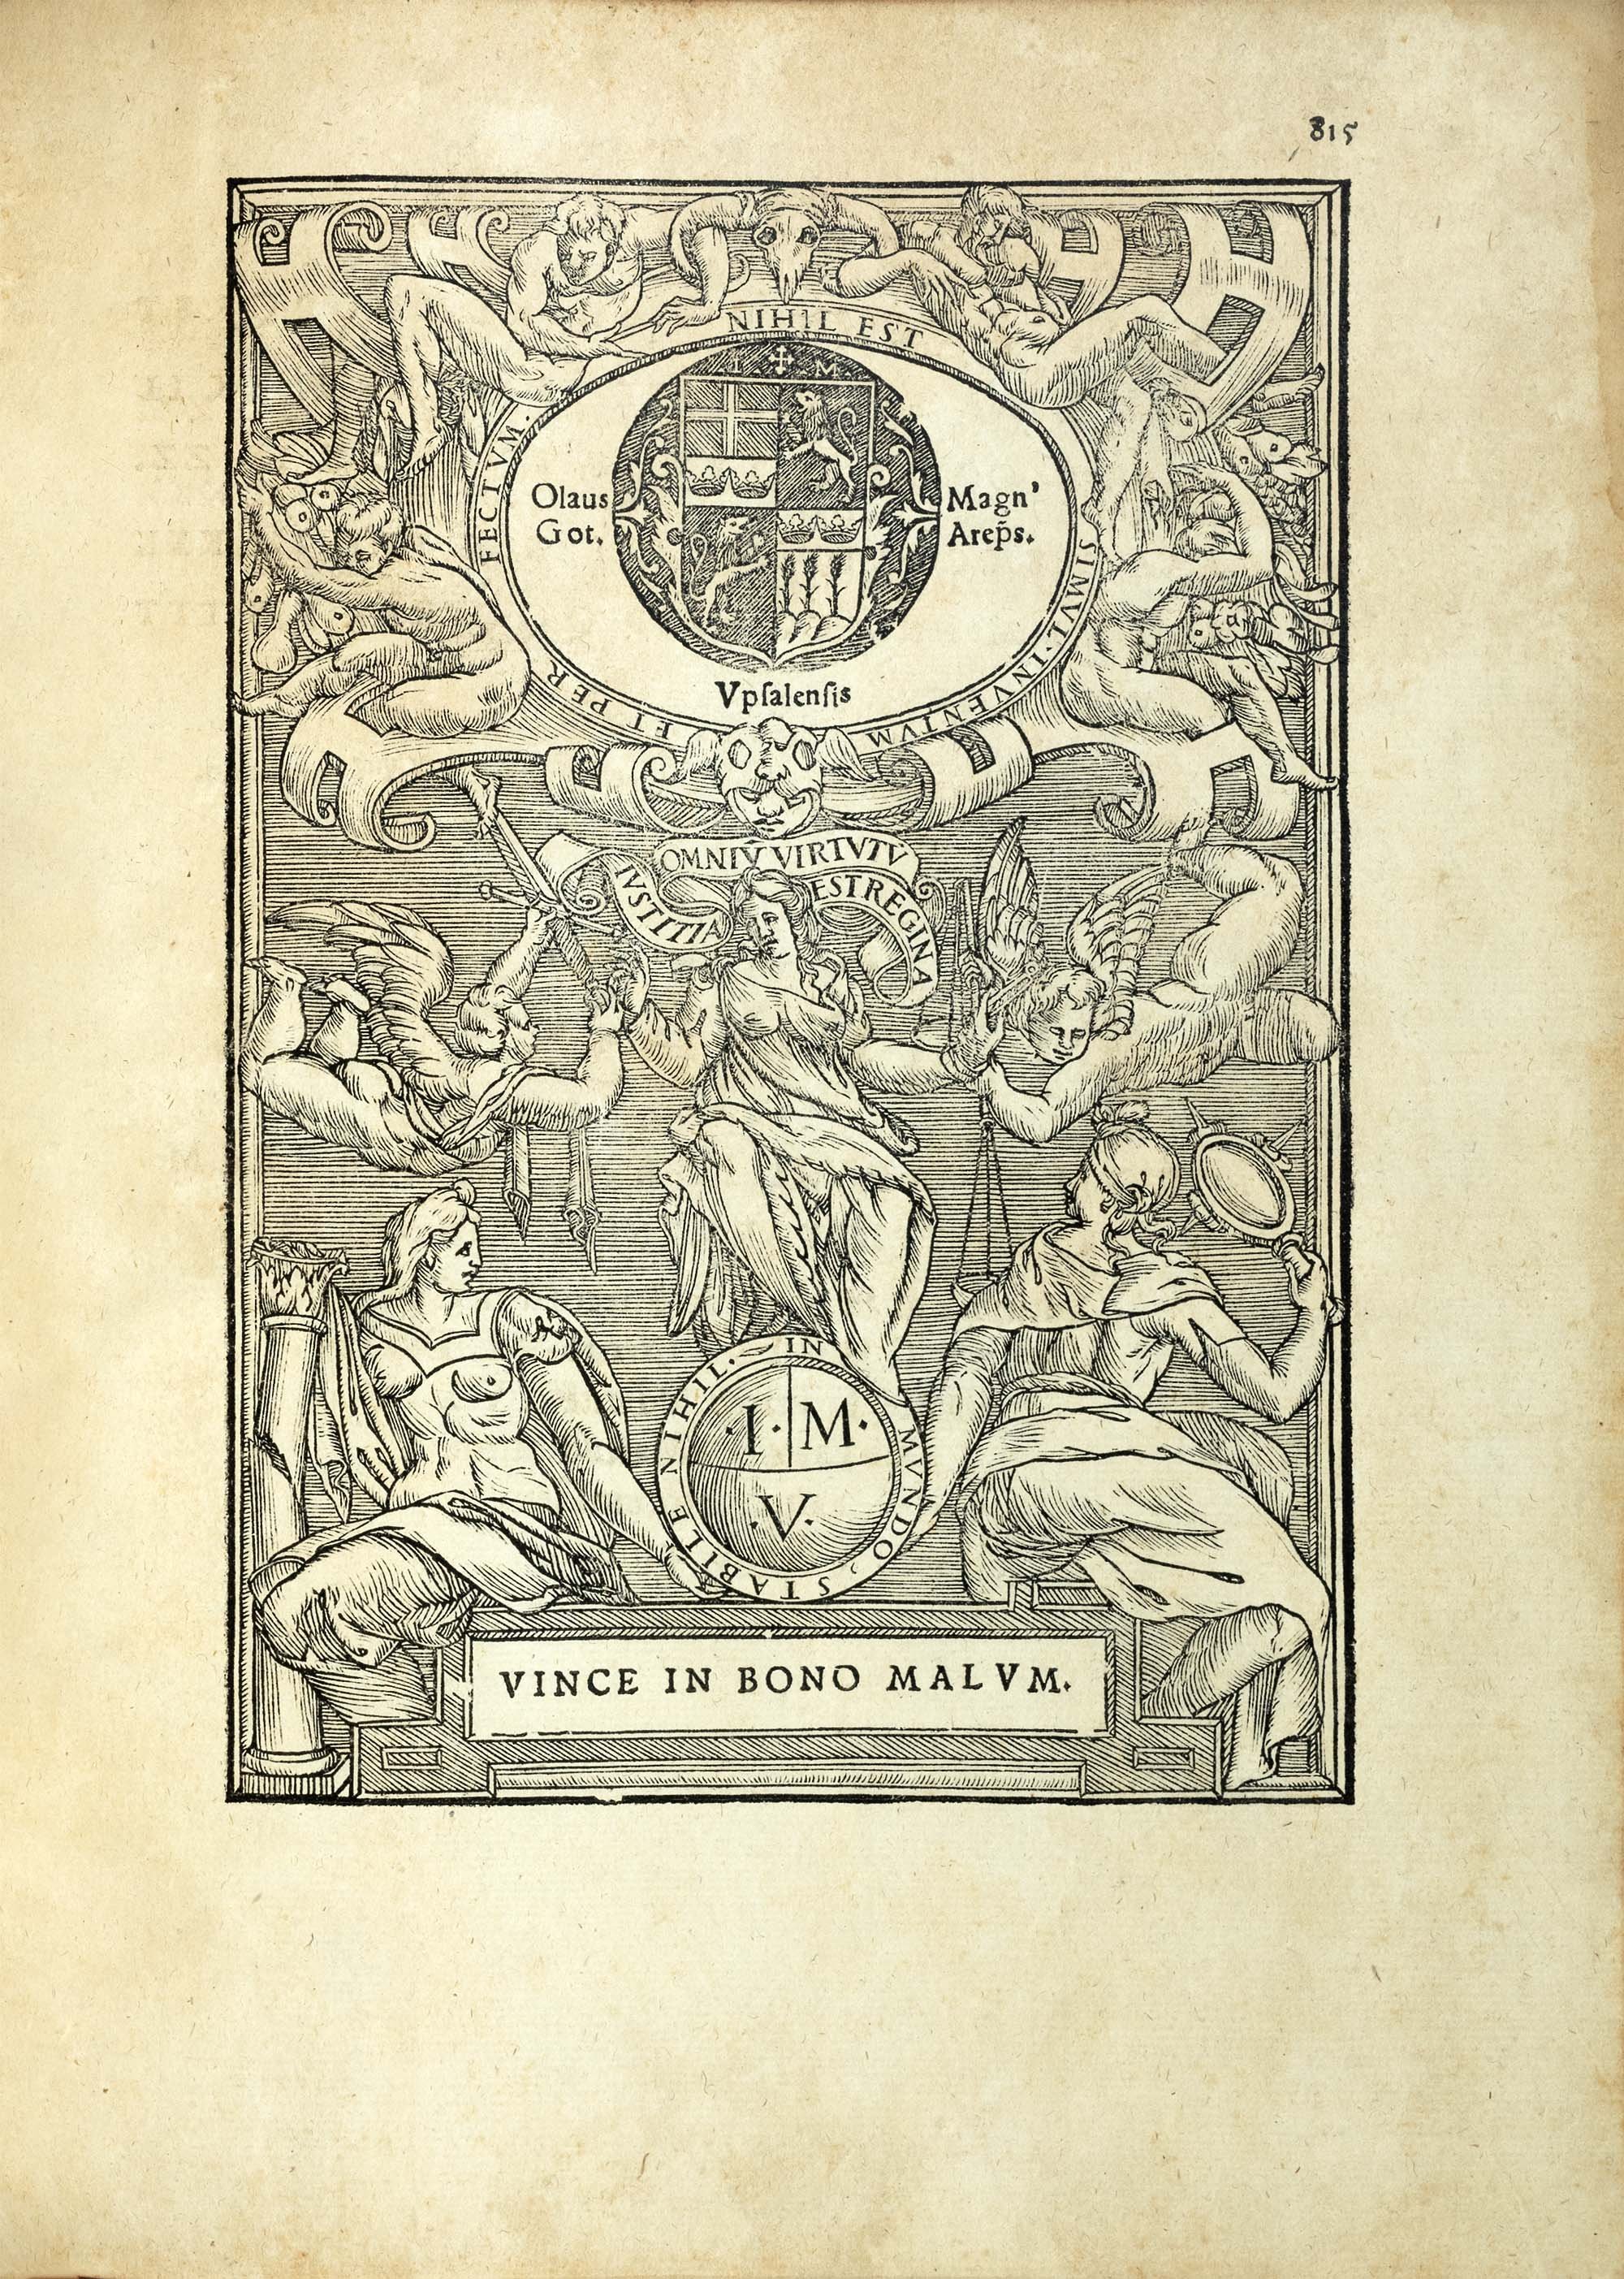 Olaus-Magnus-Historia-scandinavia-1555-first-edition-brunck-jeanson-45.jpg